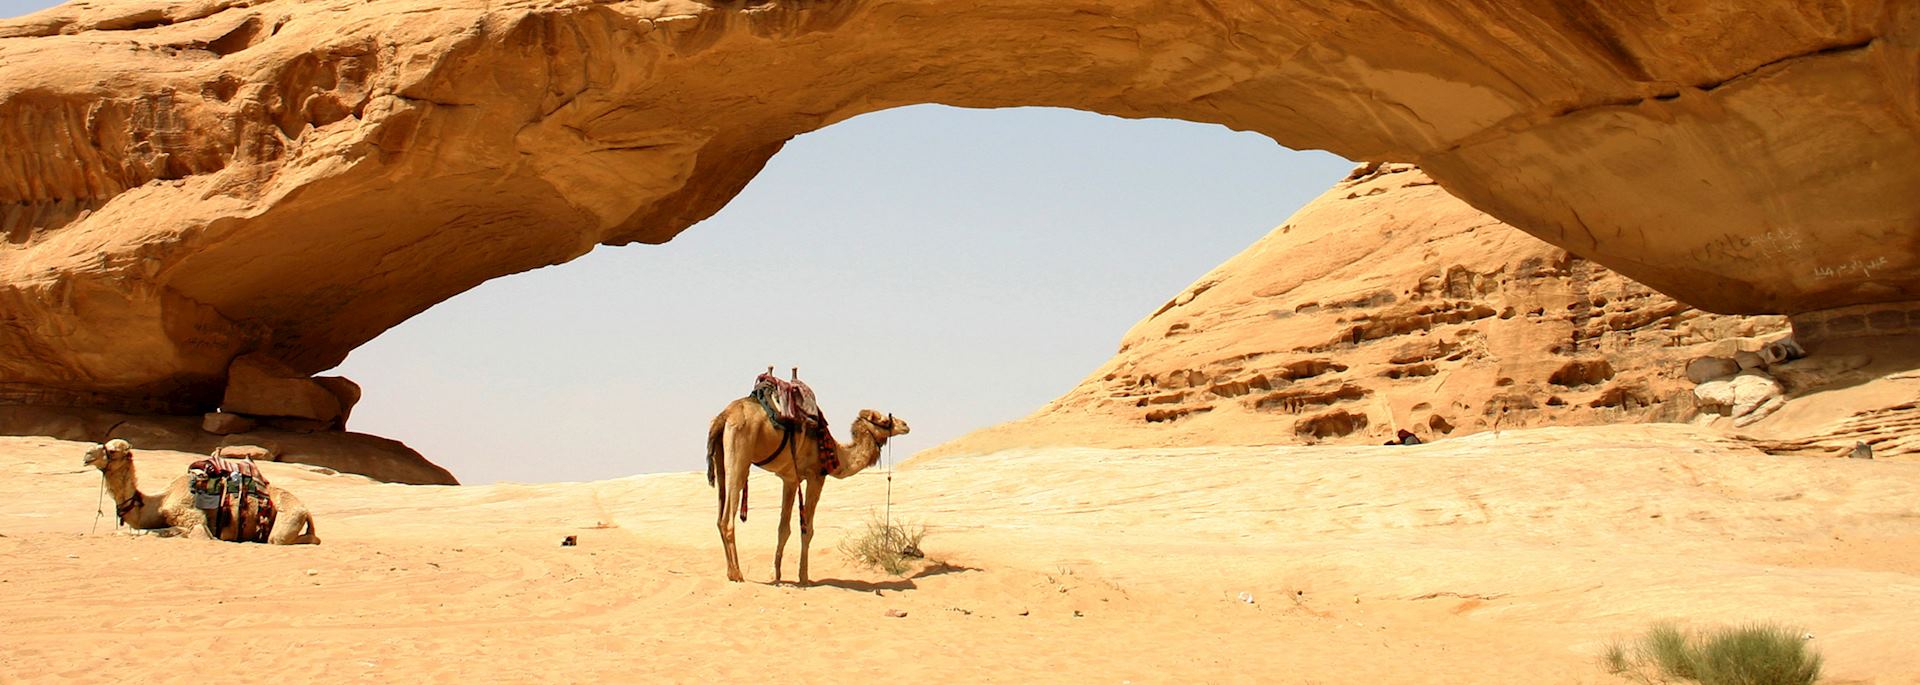 The landscape at Wadi Rum